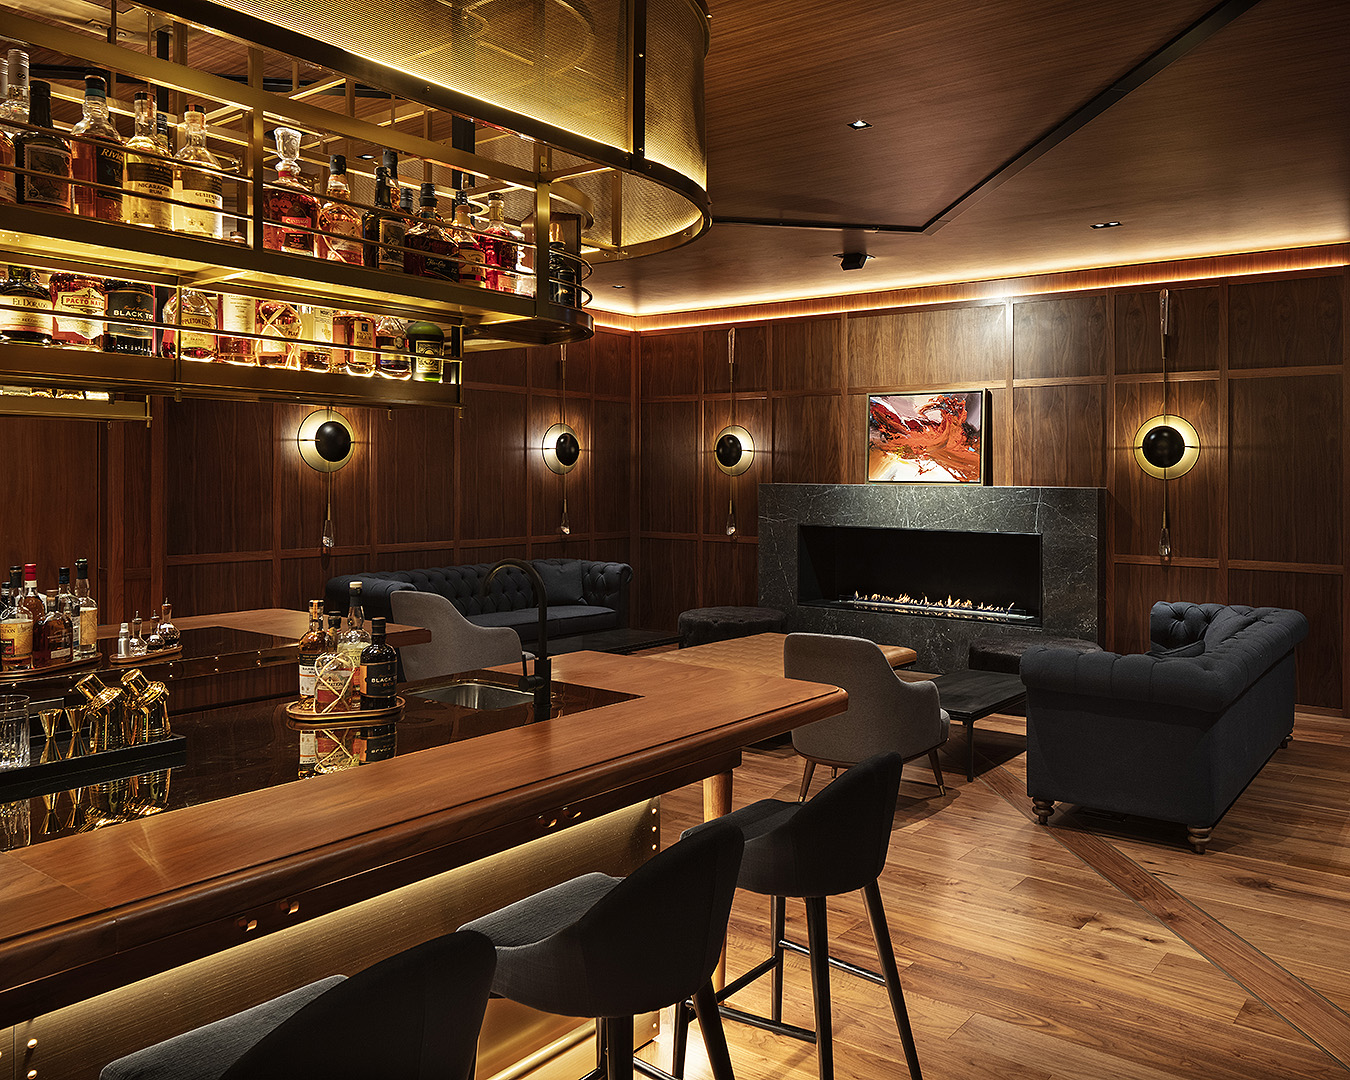 The stunning Captain's bar at the Park Hyatt hotel.